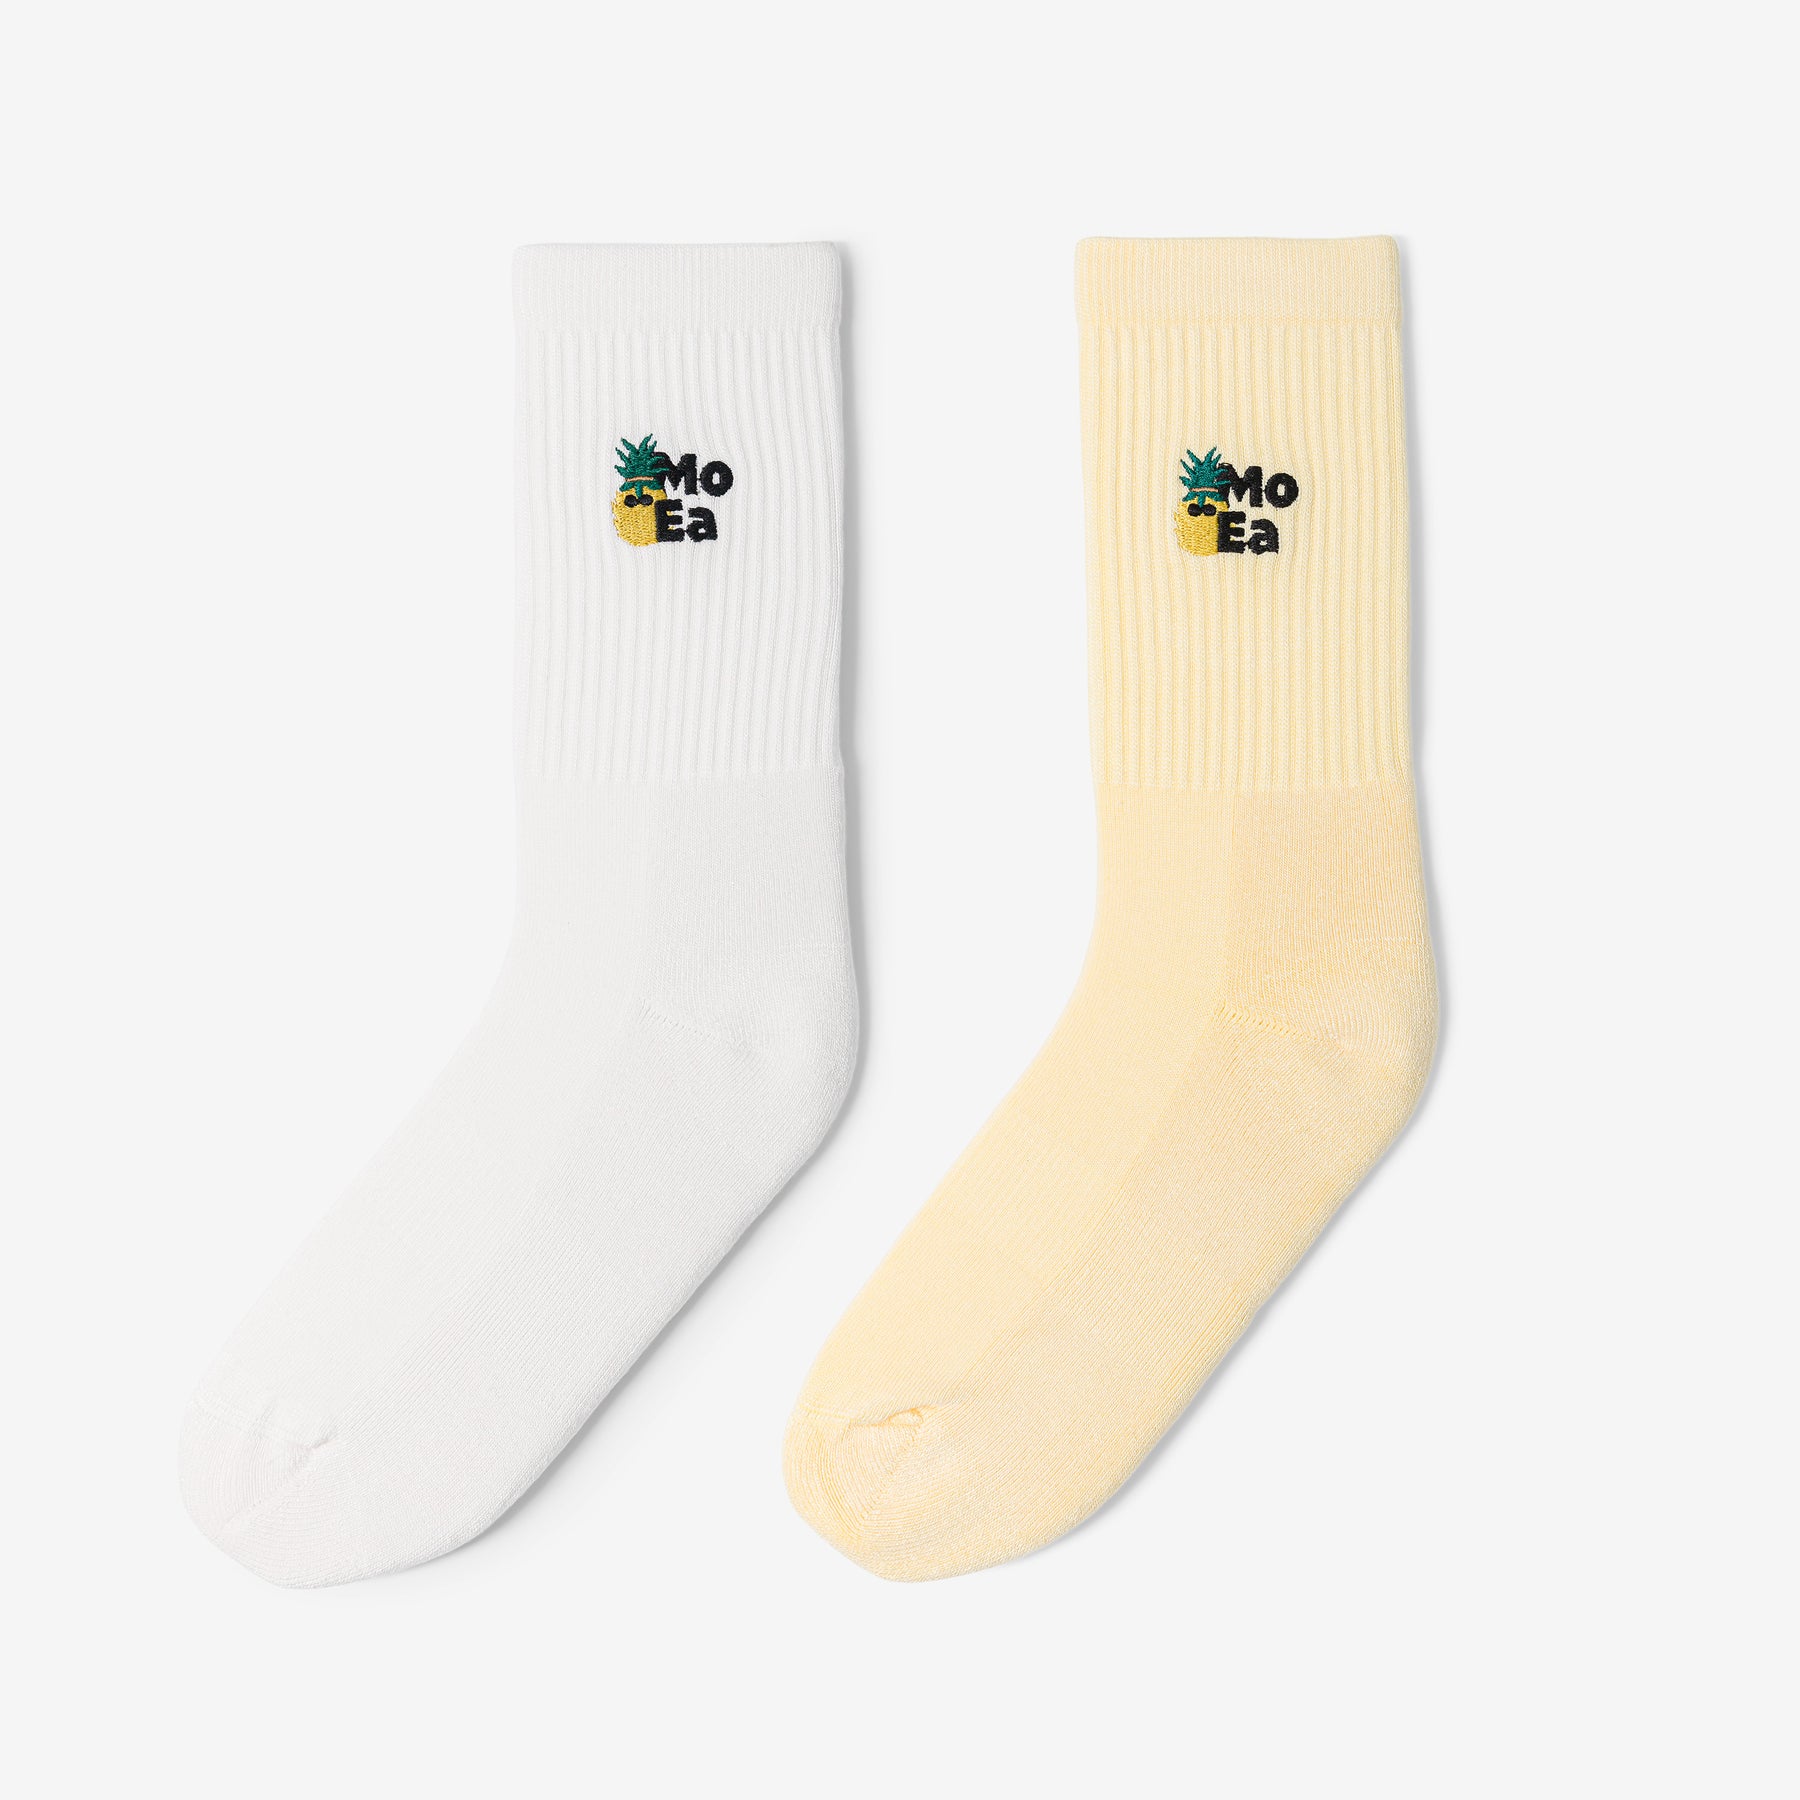 MoEa Socken // Ananas // Gelb & Weiß